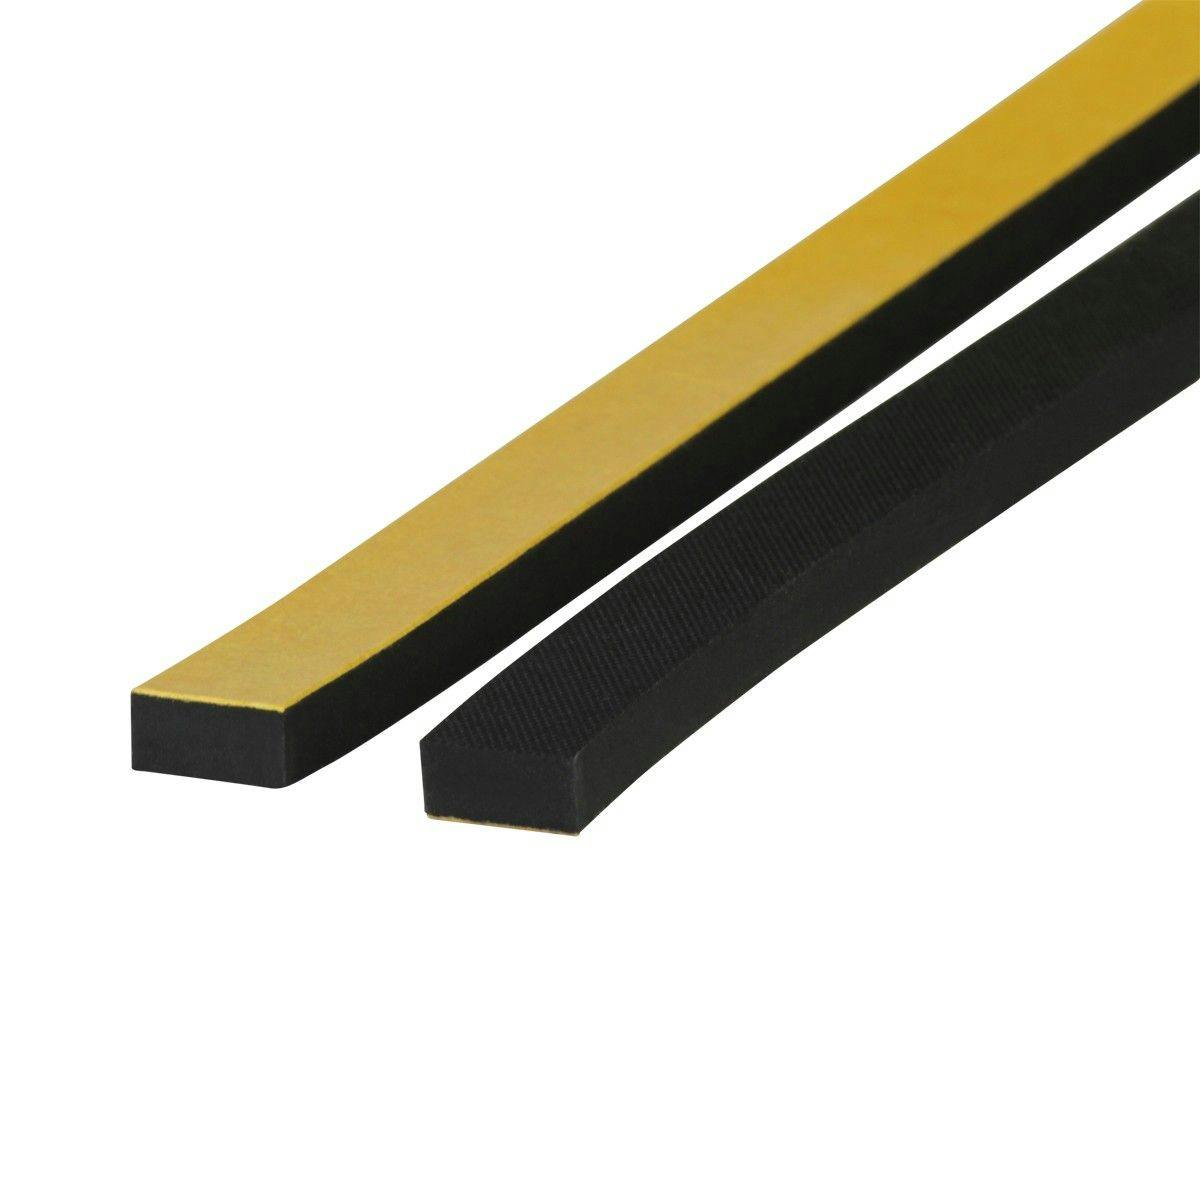 EKI 860 neoprene rubber self-adhesive high quality